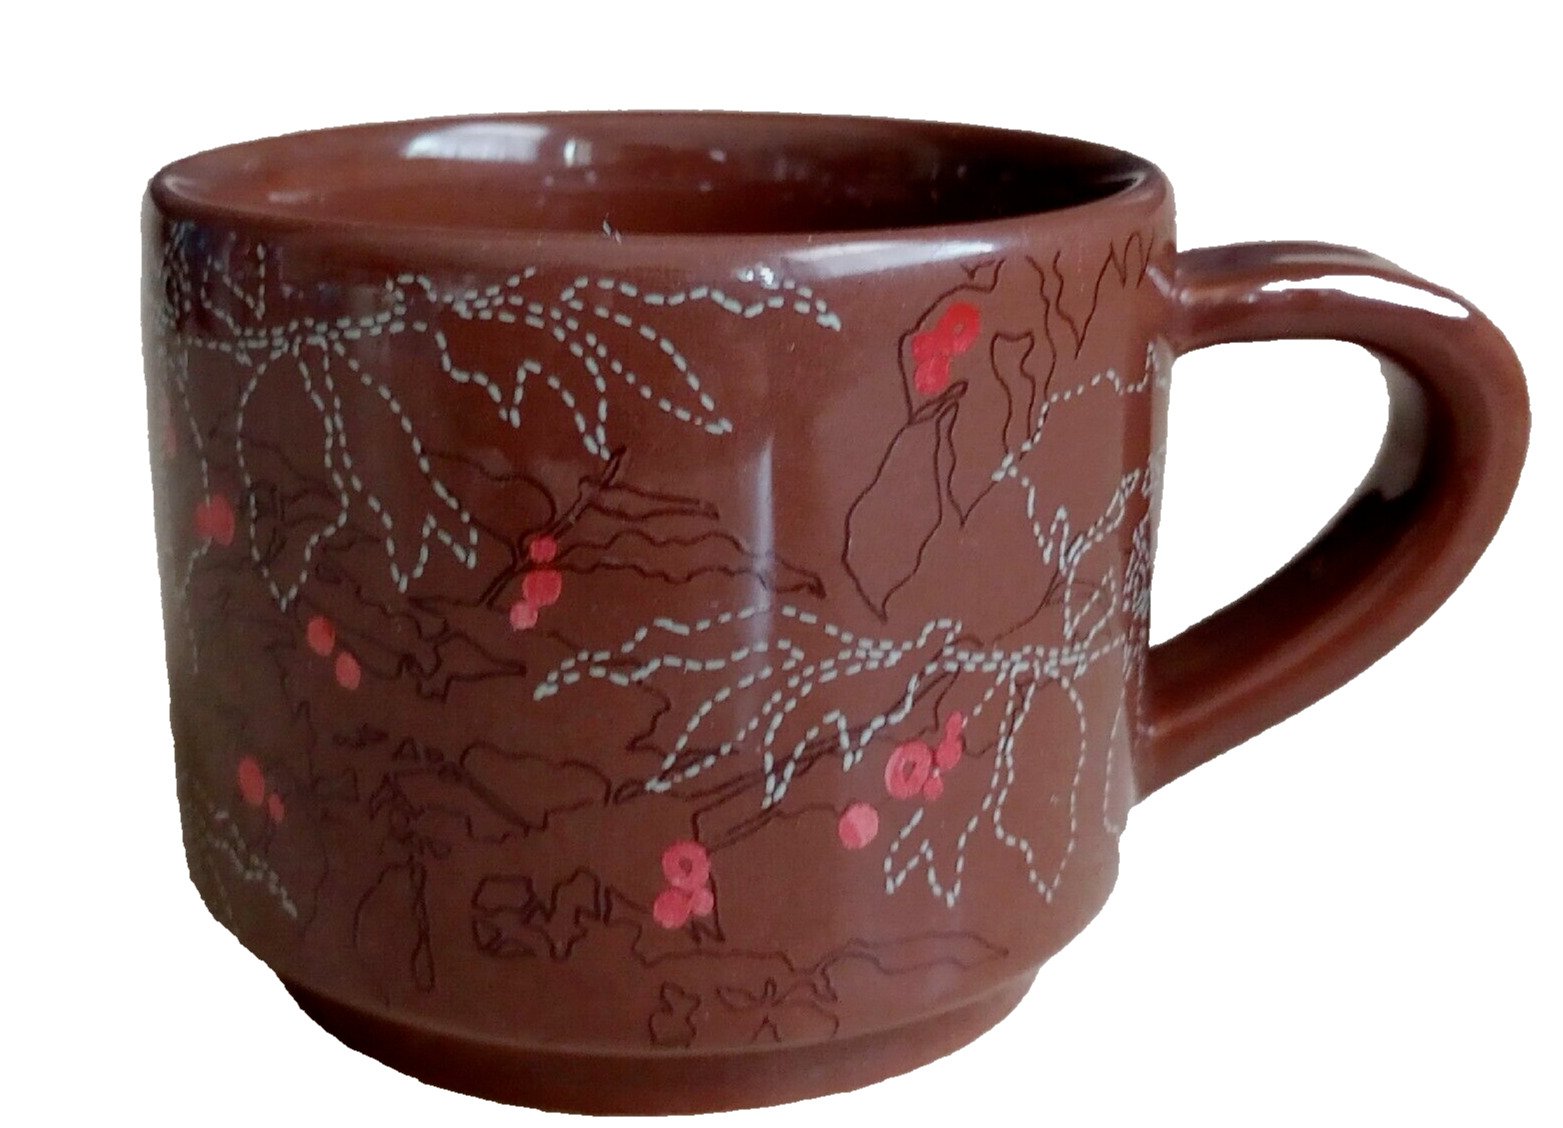 Starbucks Ceramic Coffee Mug Cup 10 oz. -Plant Floral Leaves Brown Red 2009